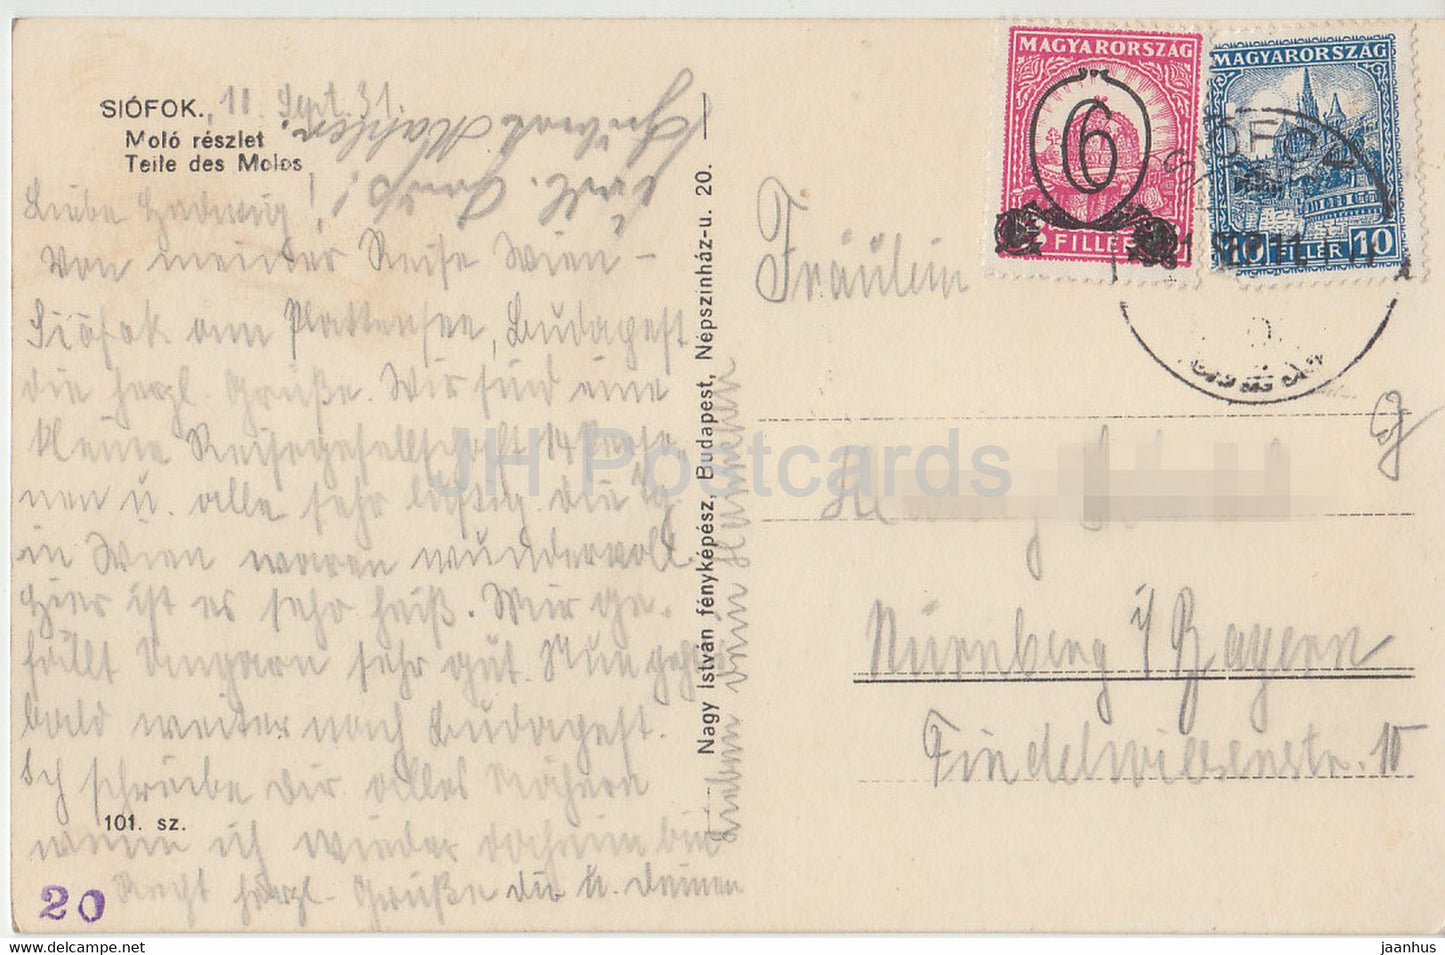 Siófok - Molo reszlet - Teile des Molos - Pier - alte Postkarte - 1931 - Ungarn - gebraucht